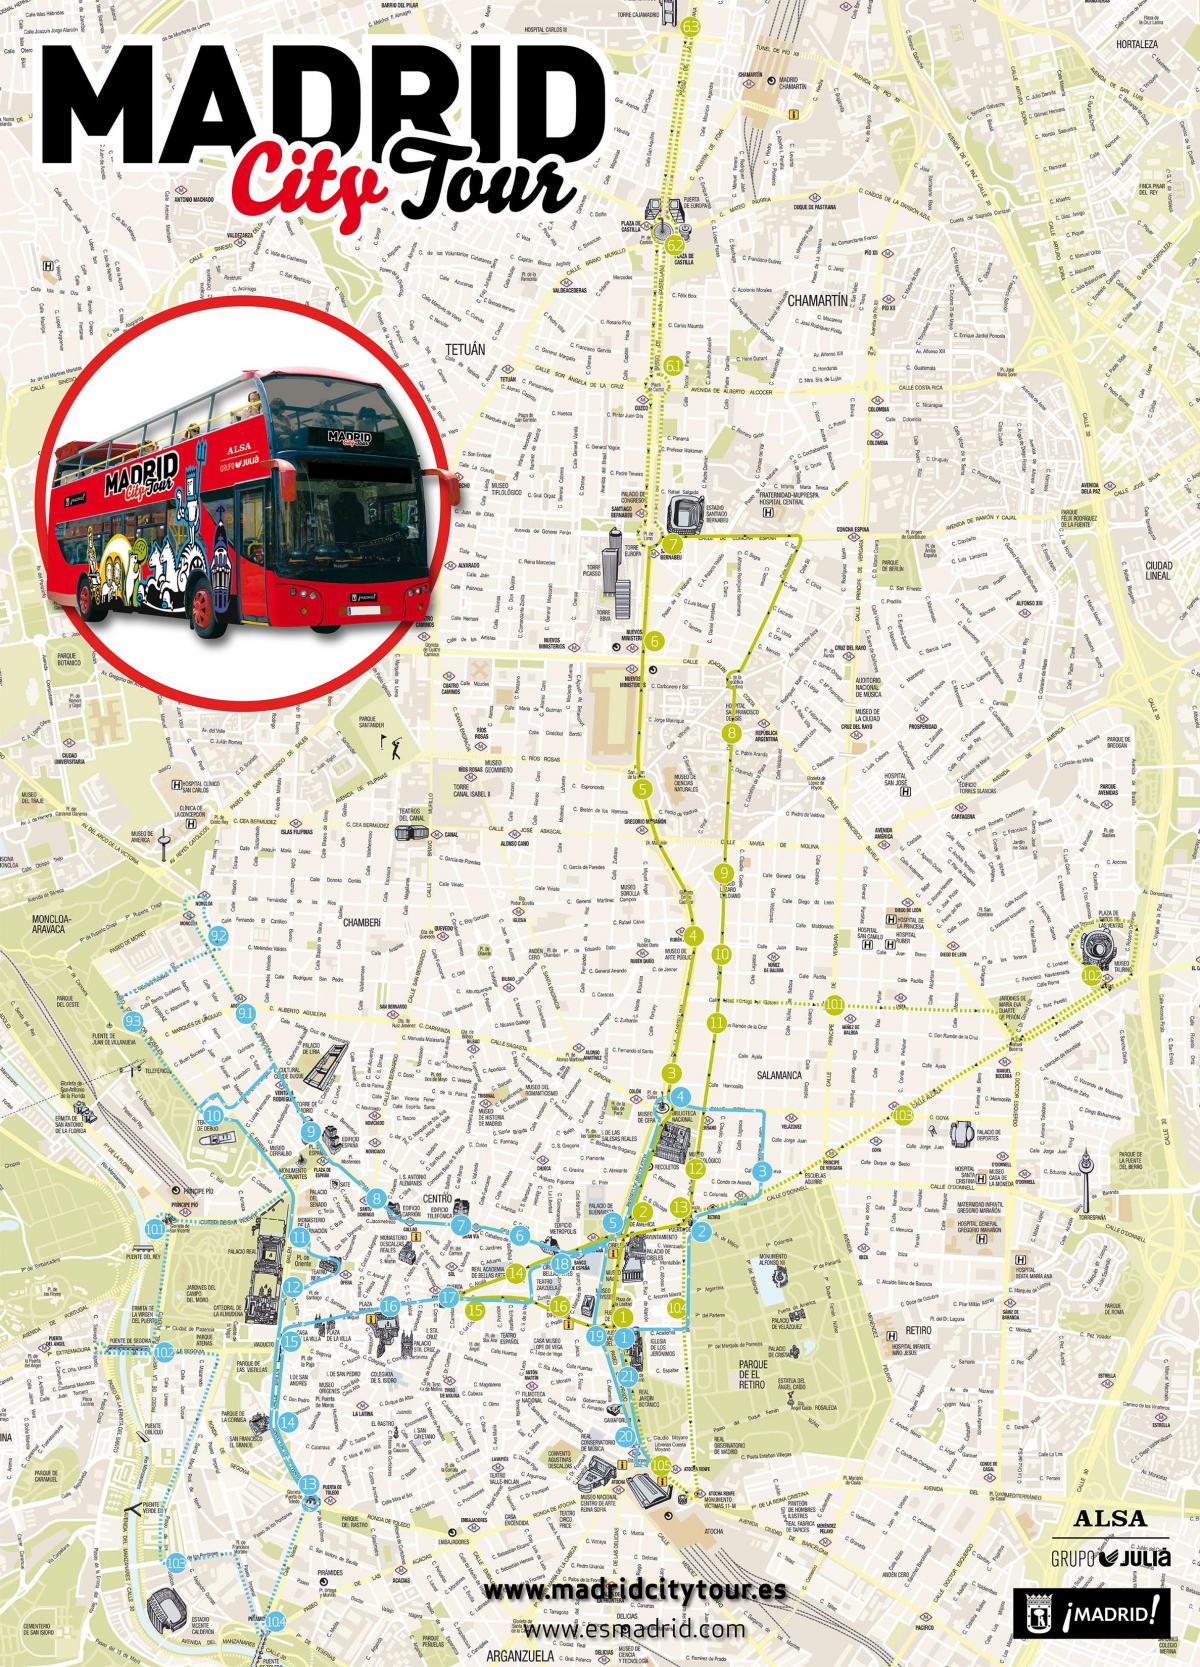 Madrid bus turistico mappa